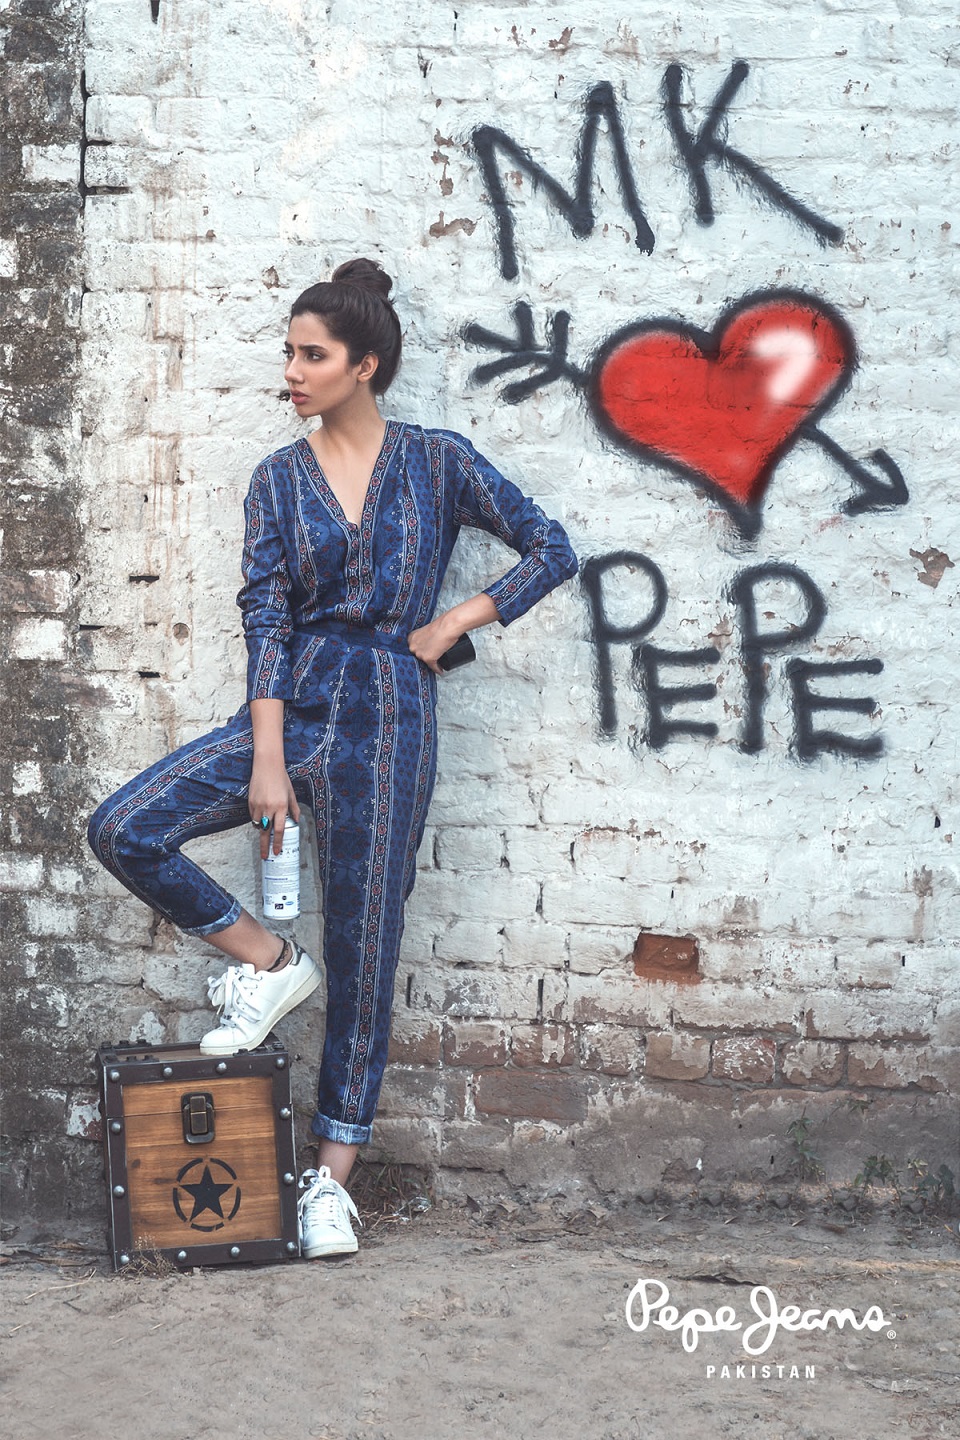 Mahira Khan for Pepe Jeans Pakistan Winter 2015 Campaign - #MKLovesPepe (13)